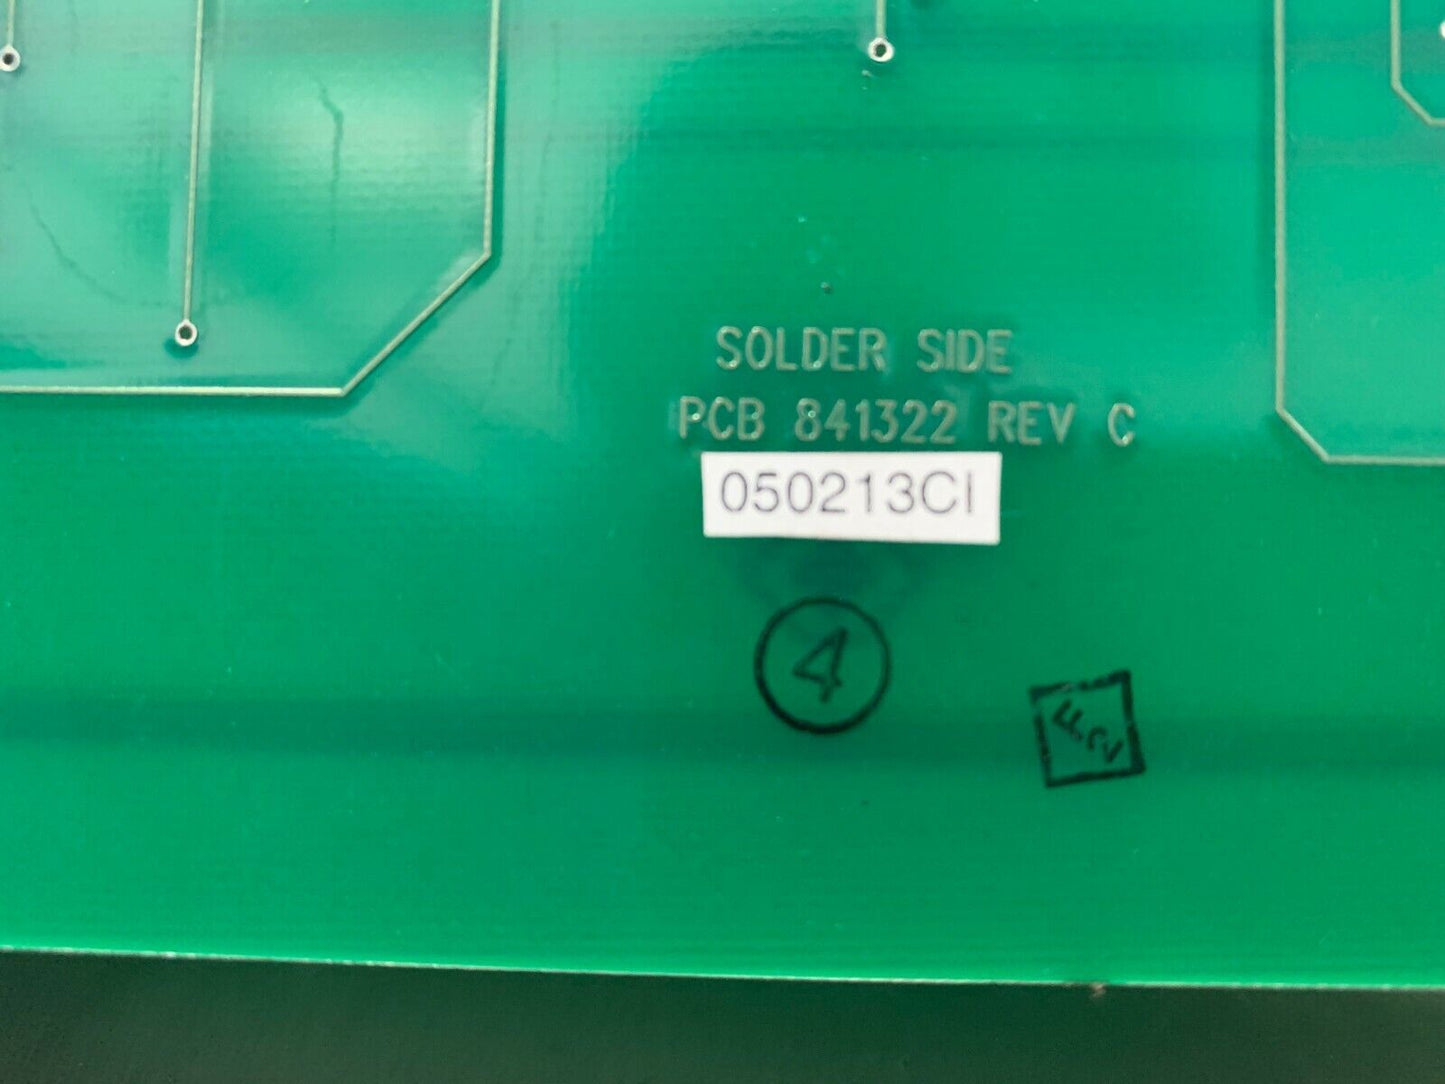 Removed from Cincinnati Laser key board PCB 841322